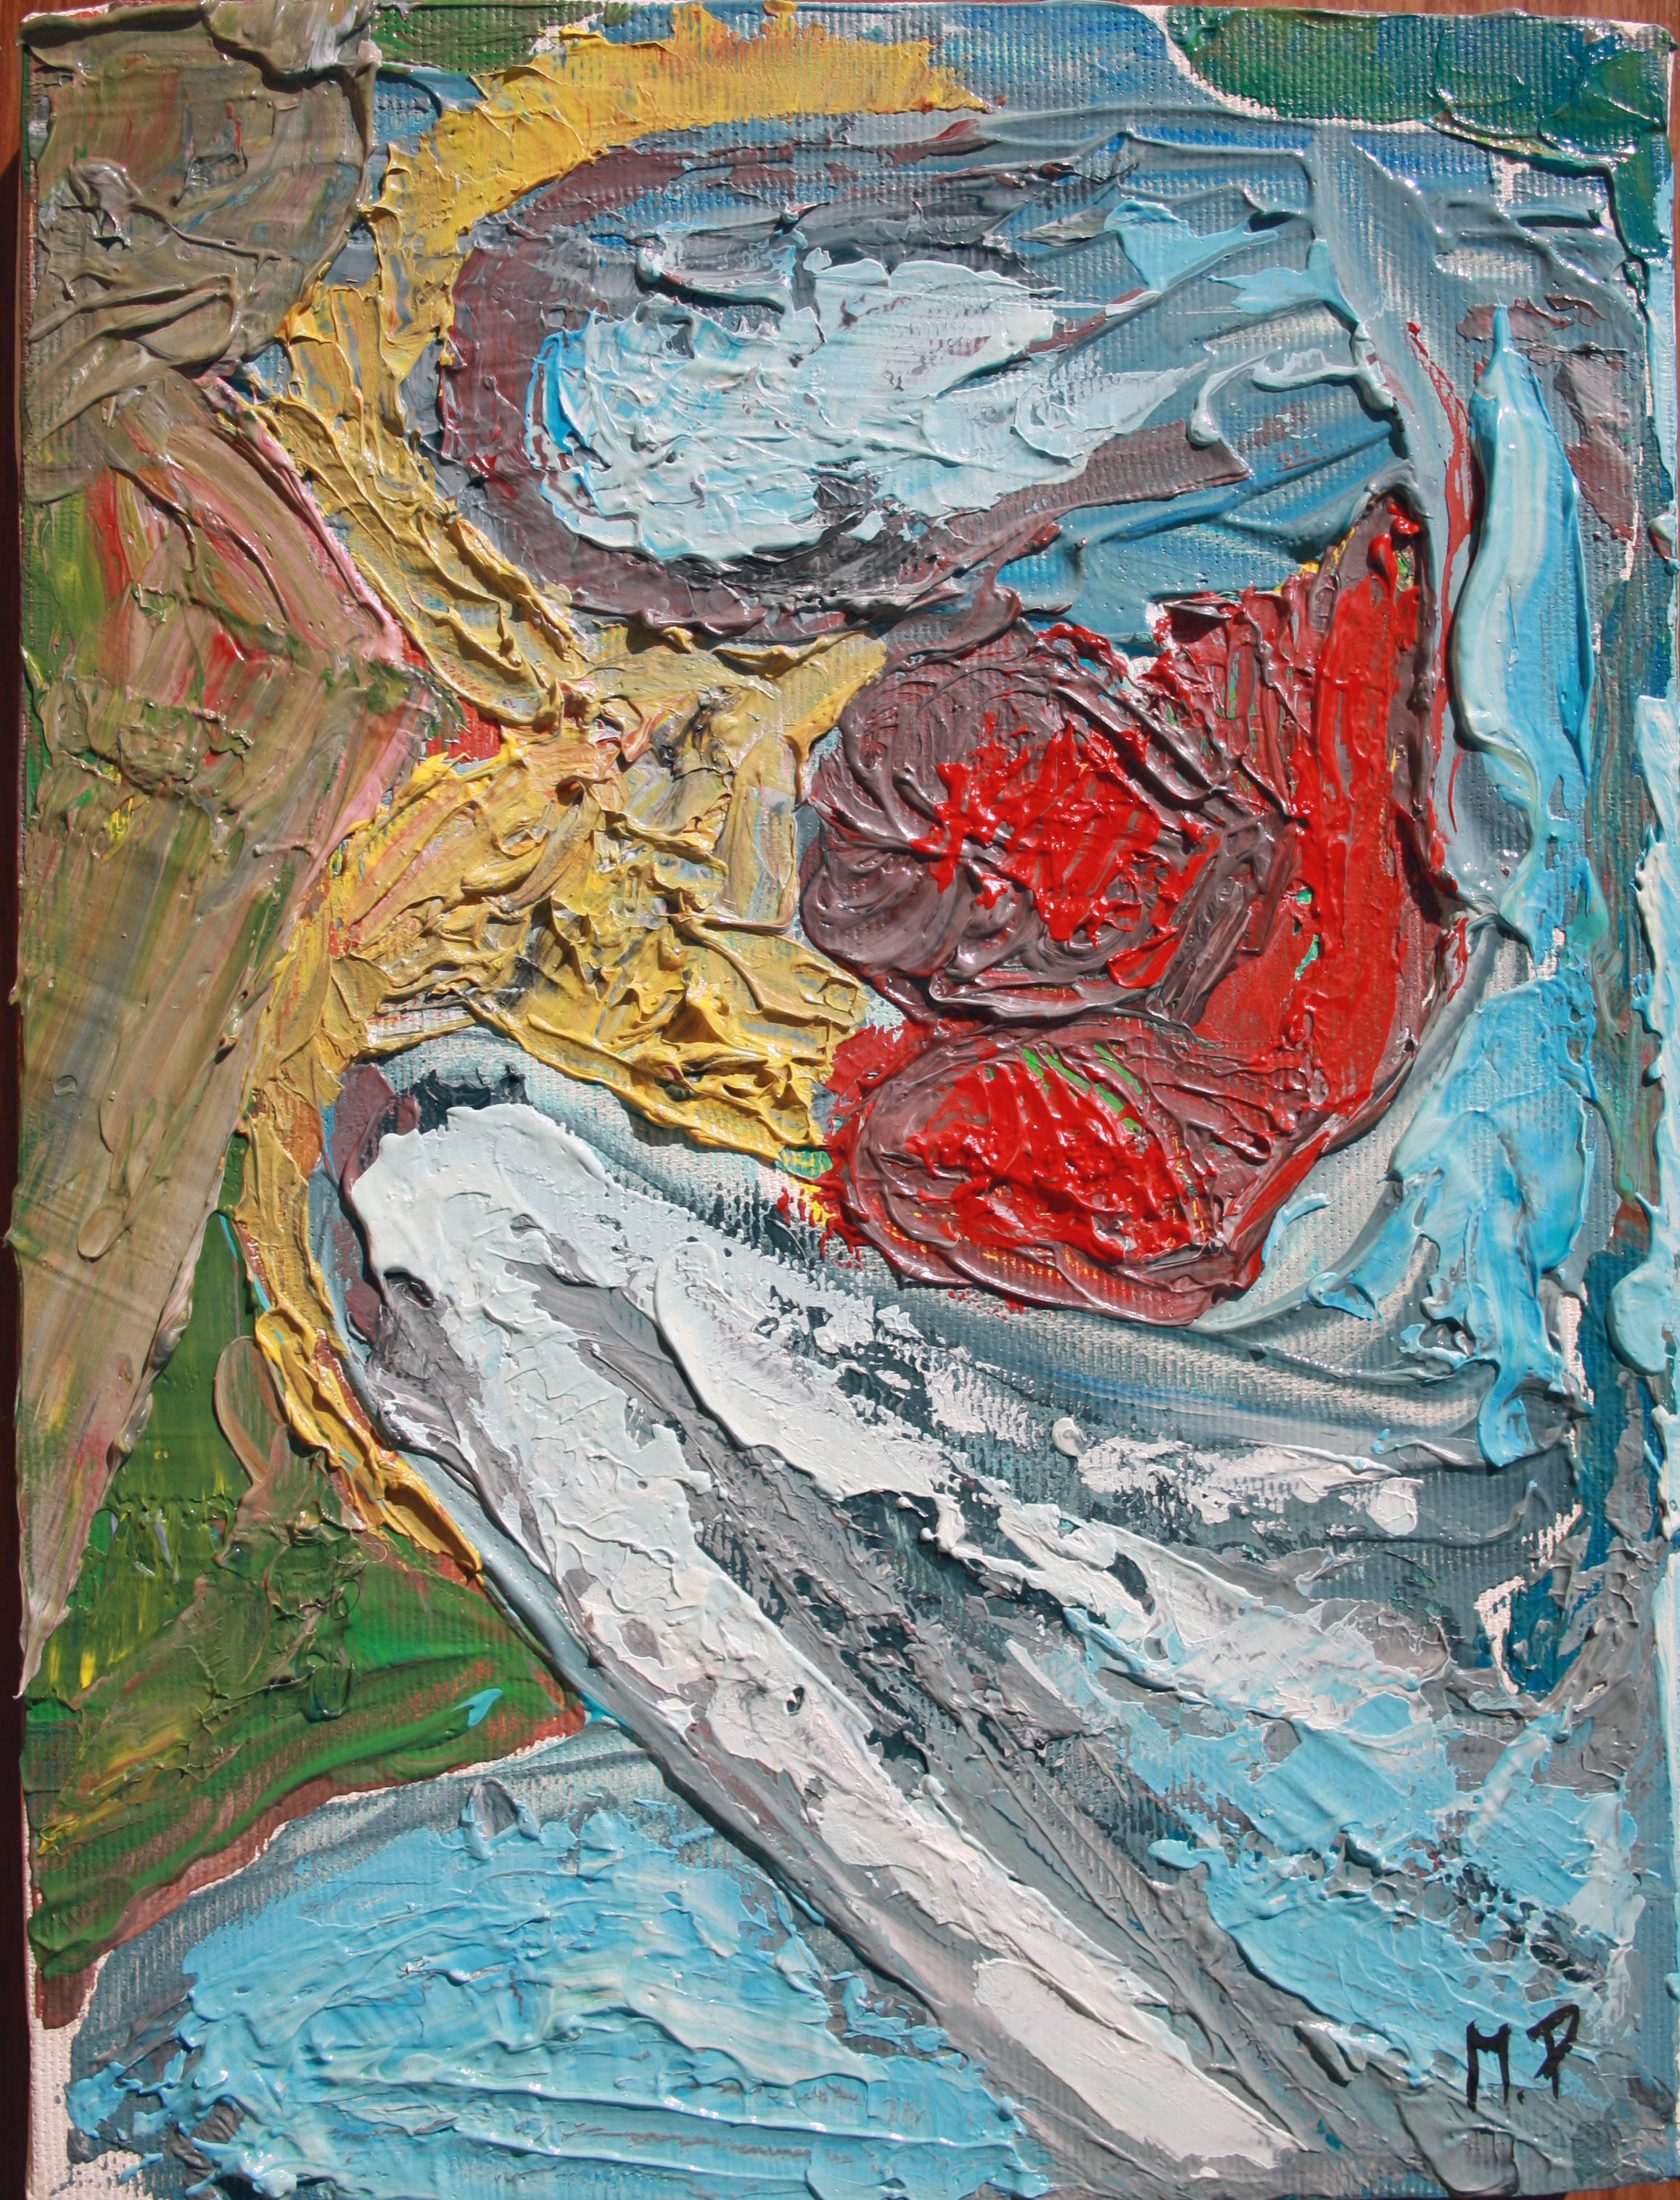 Maternità (Maternity), 2016 olio su tela (oil painting on canvas), Pasquale Mastrogiacomo, Acerno (SA).